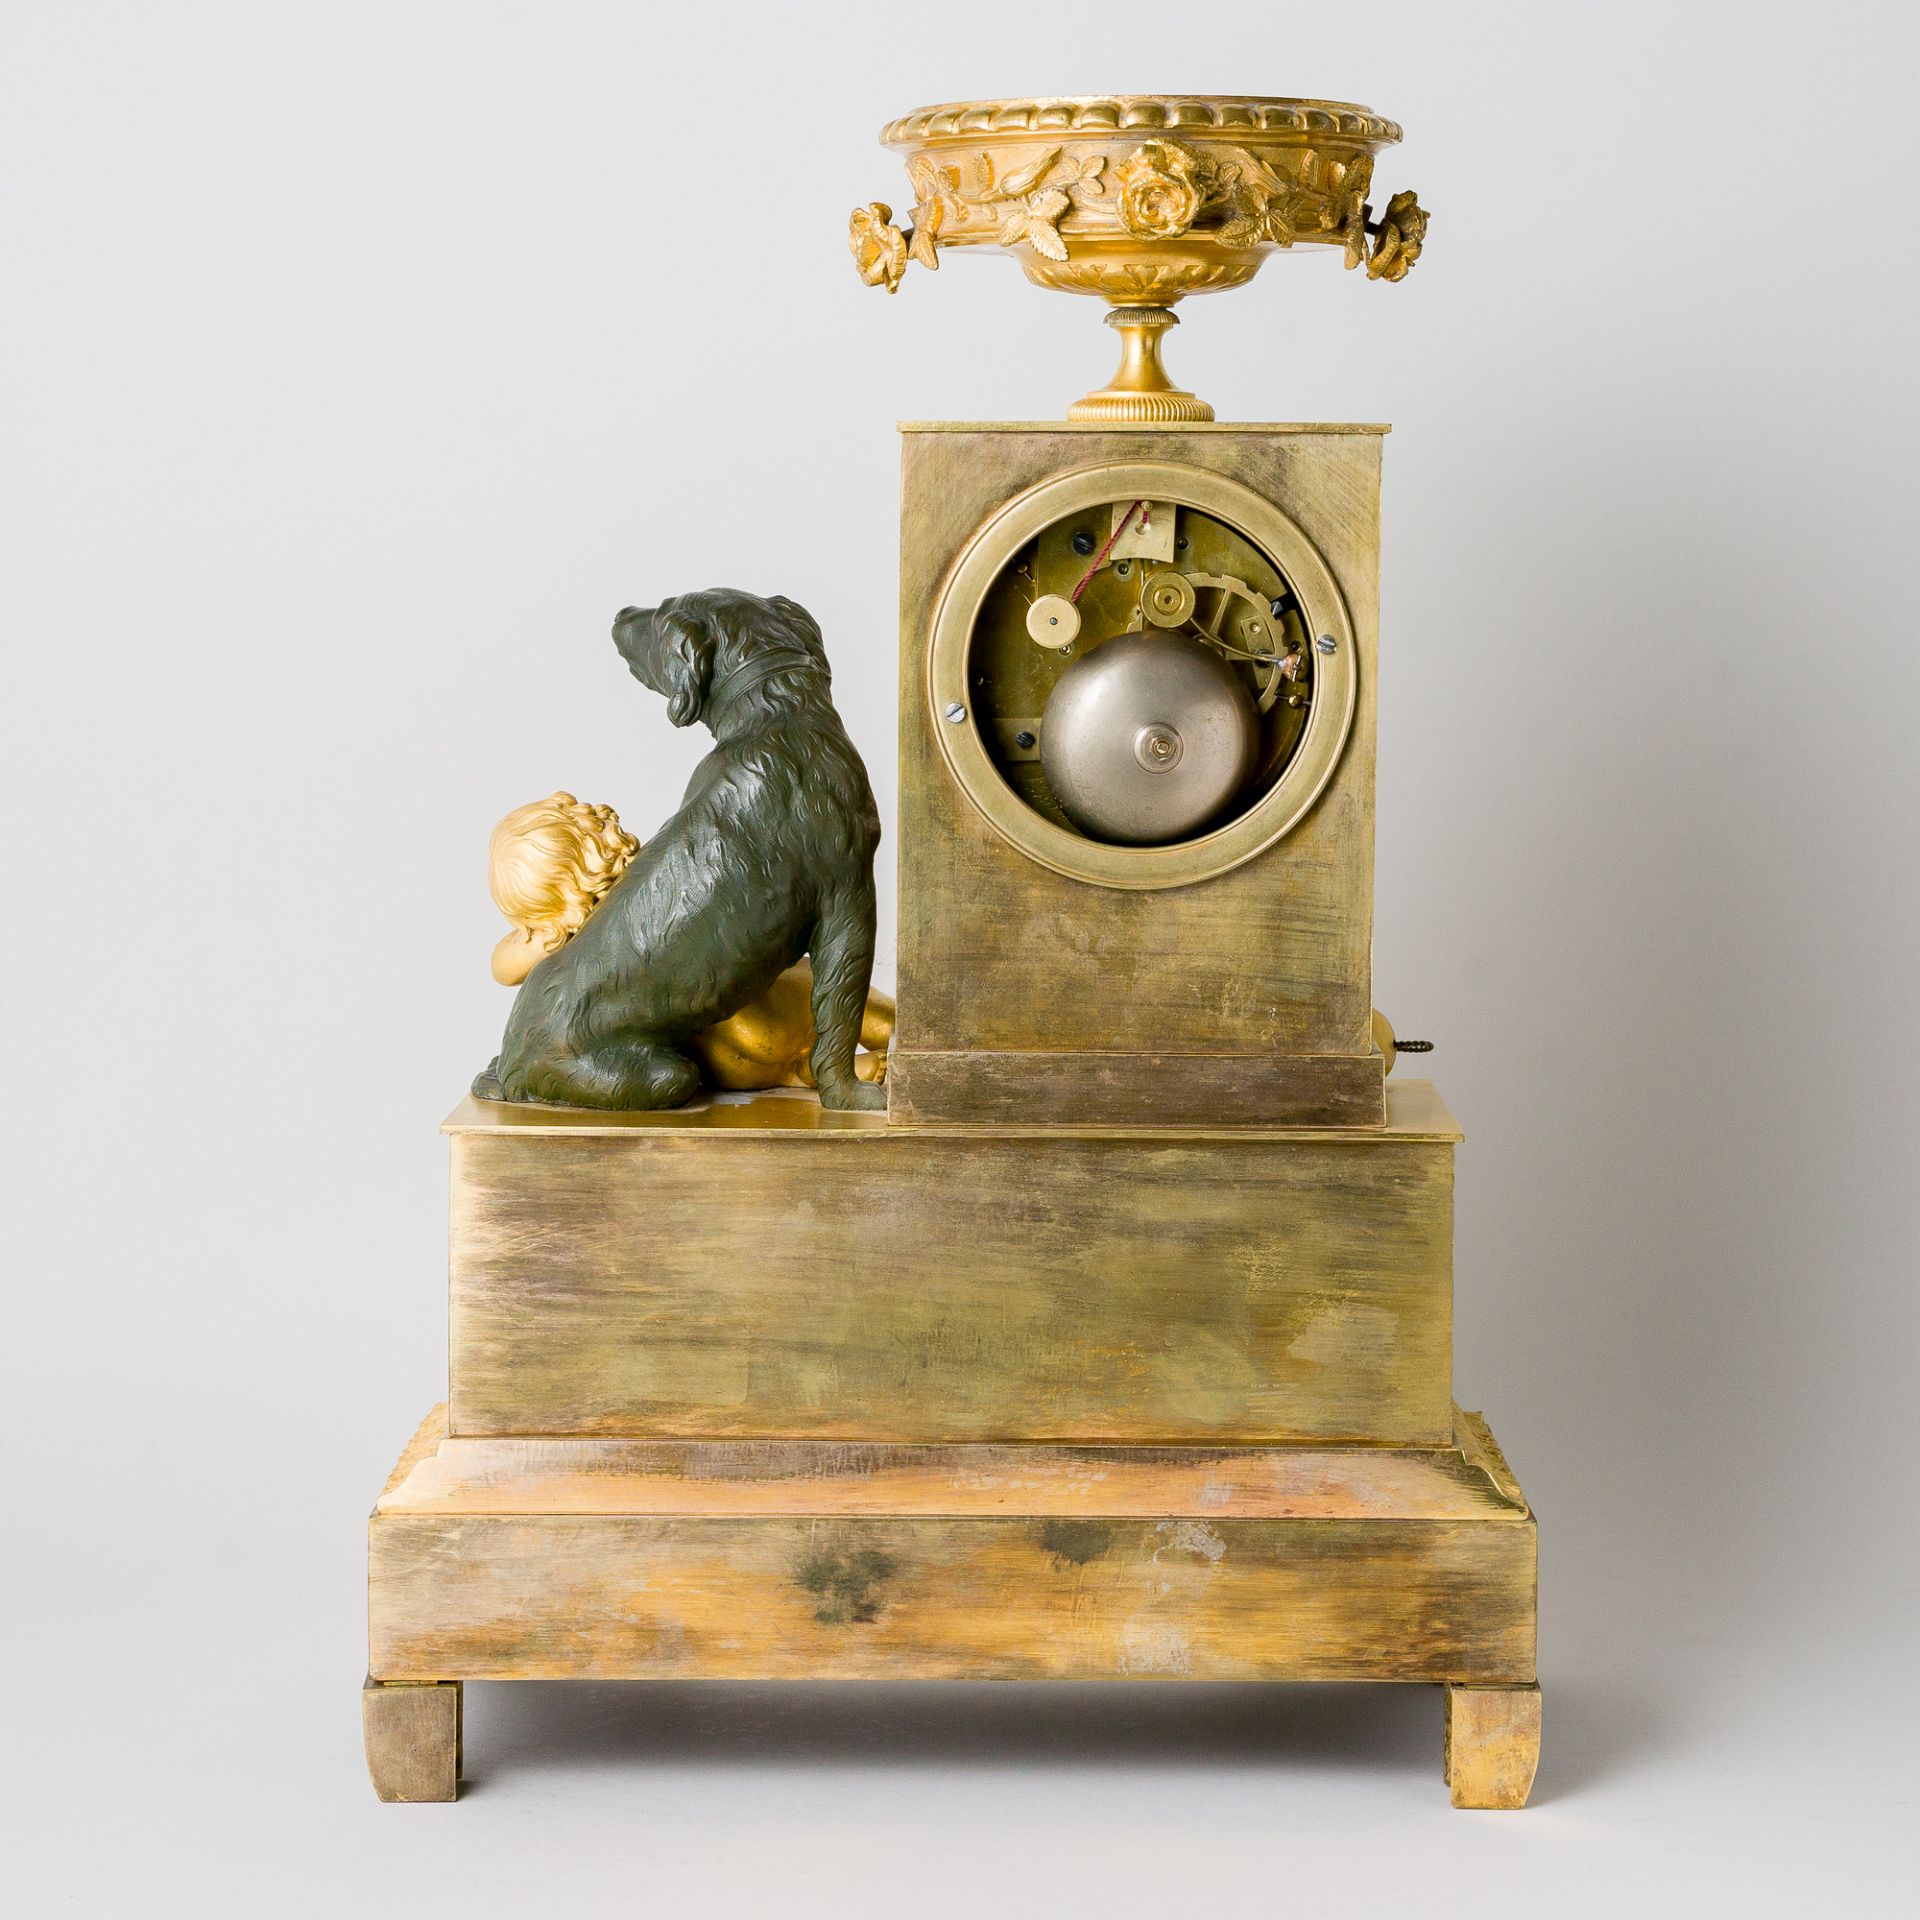 Sehr feine Empire Pendule mit Bronze, Leroux a Paris, Frankreich um 1815 - Image 4 of 10